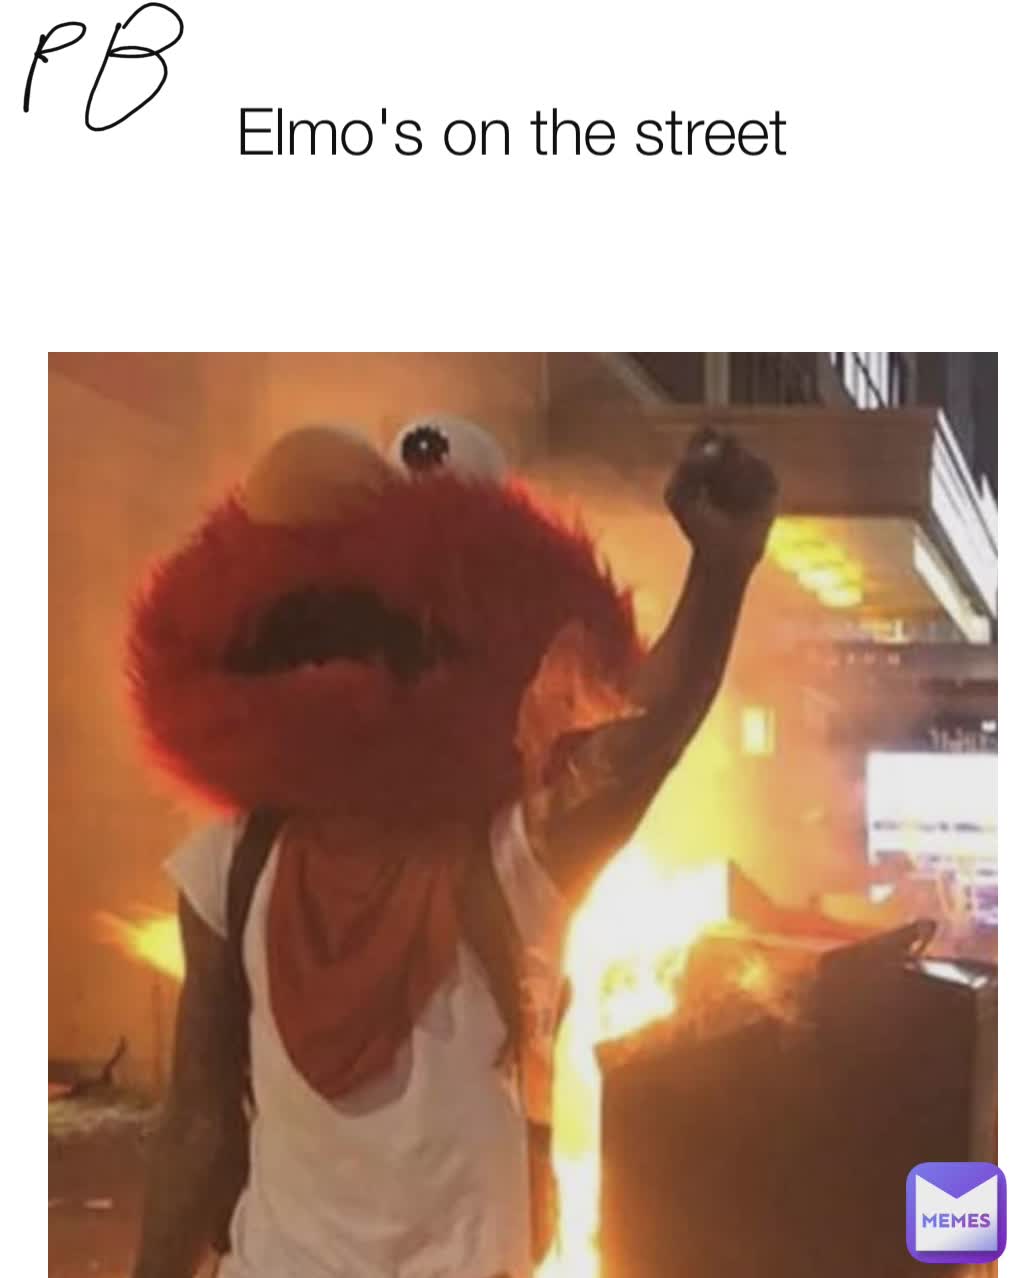 Elmo's on the street